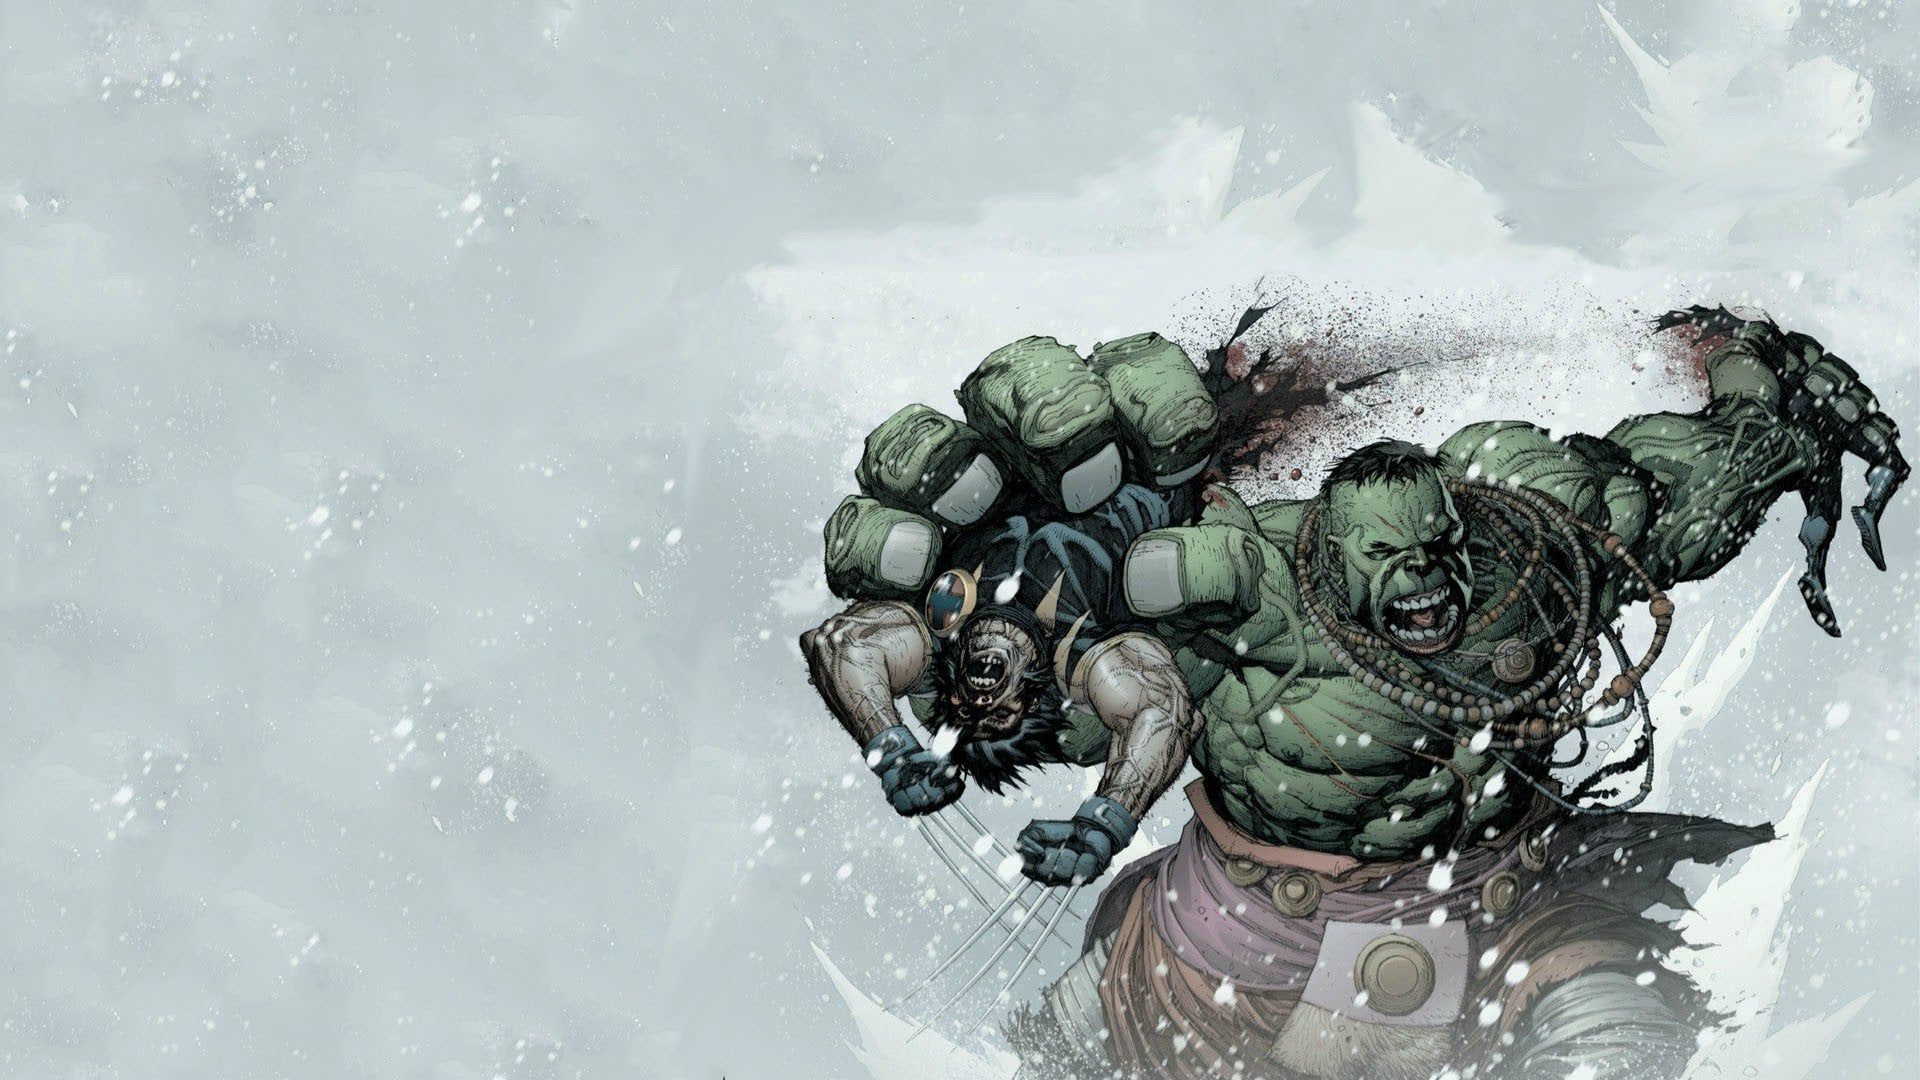 Hulk vs Wolverine [1920x1080]